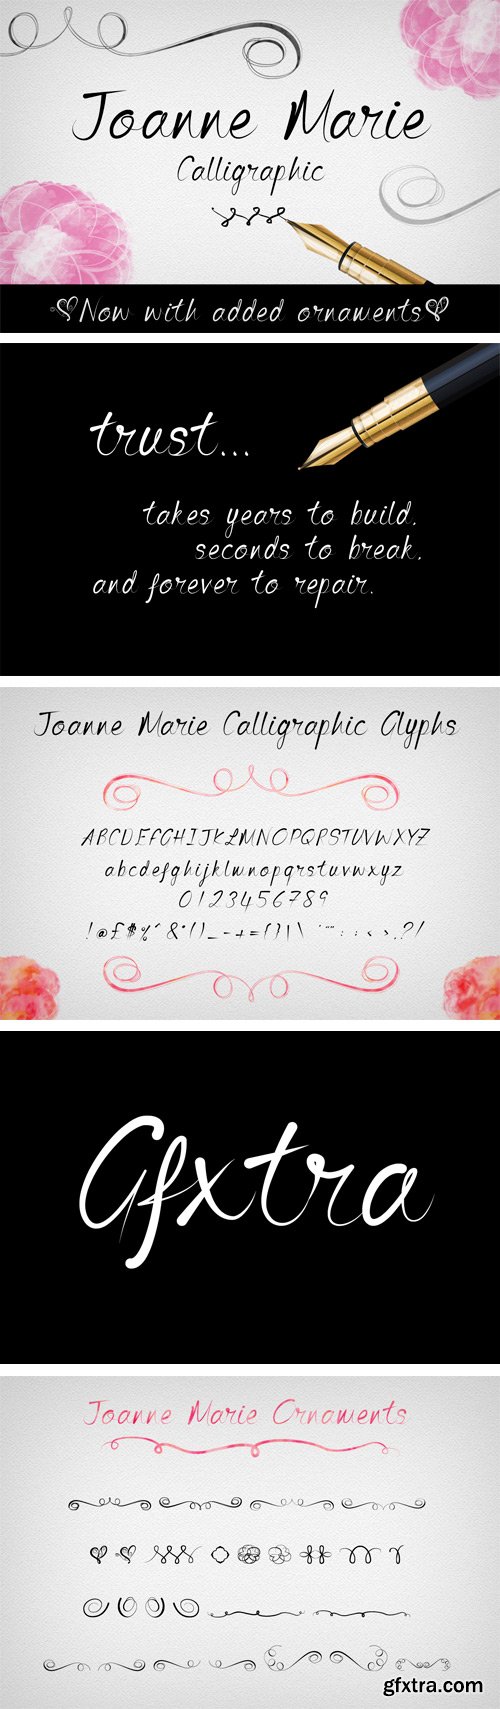 CM - Joanne Marie Calligraphic Font